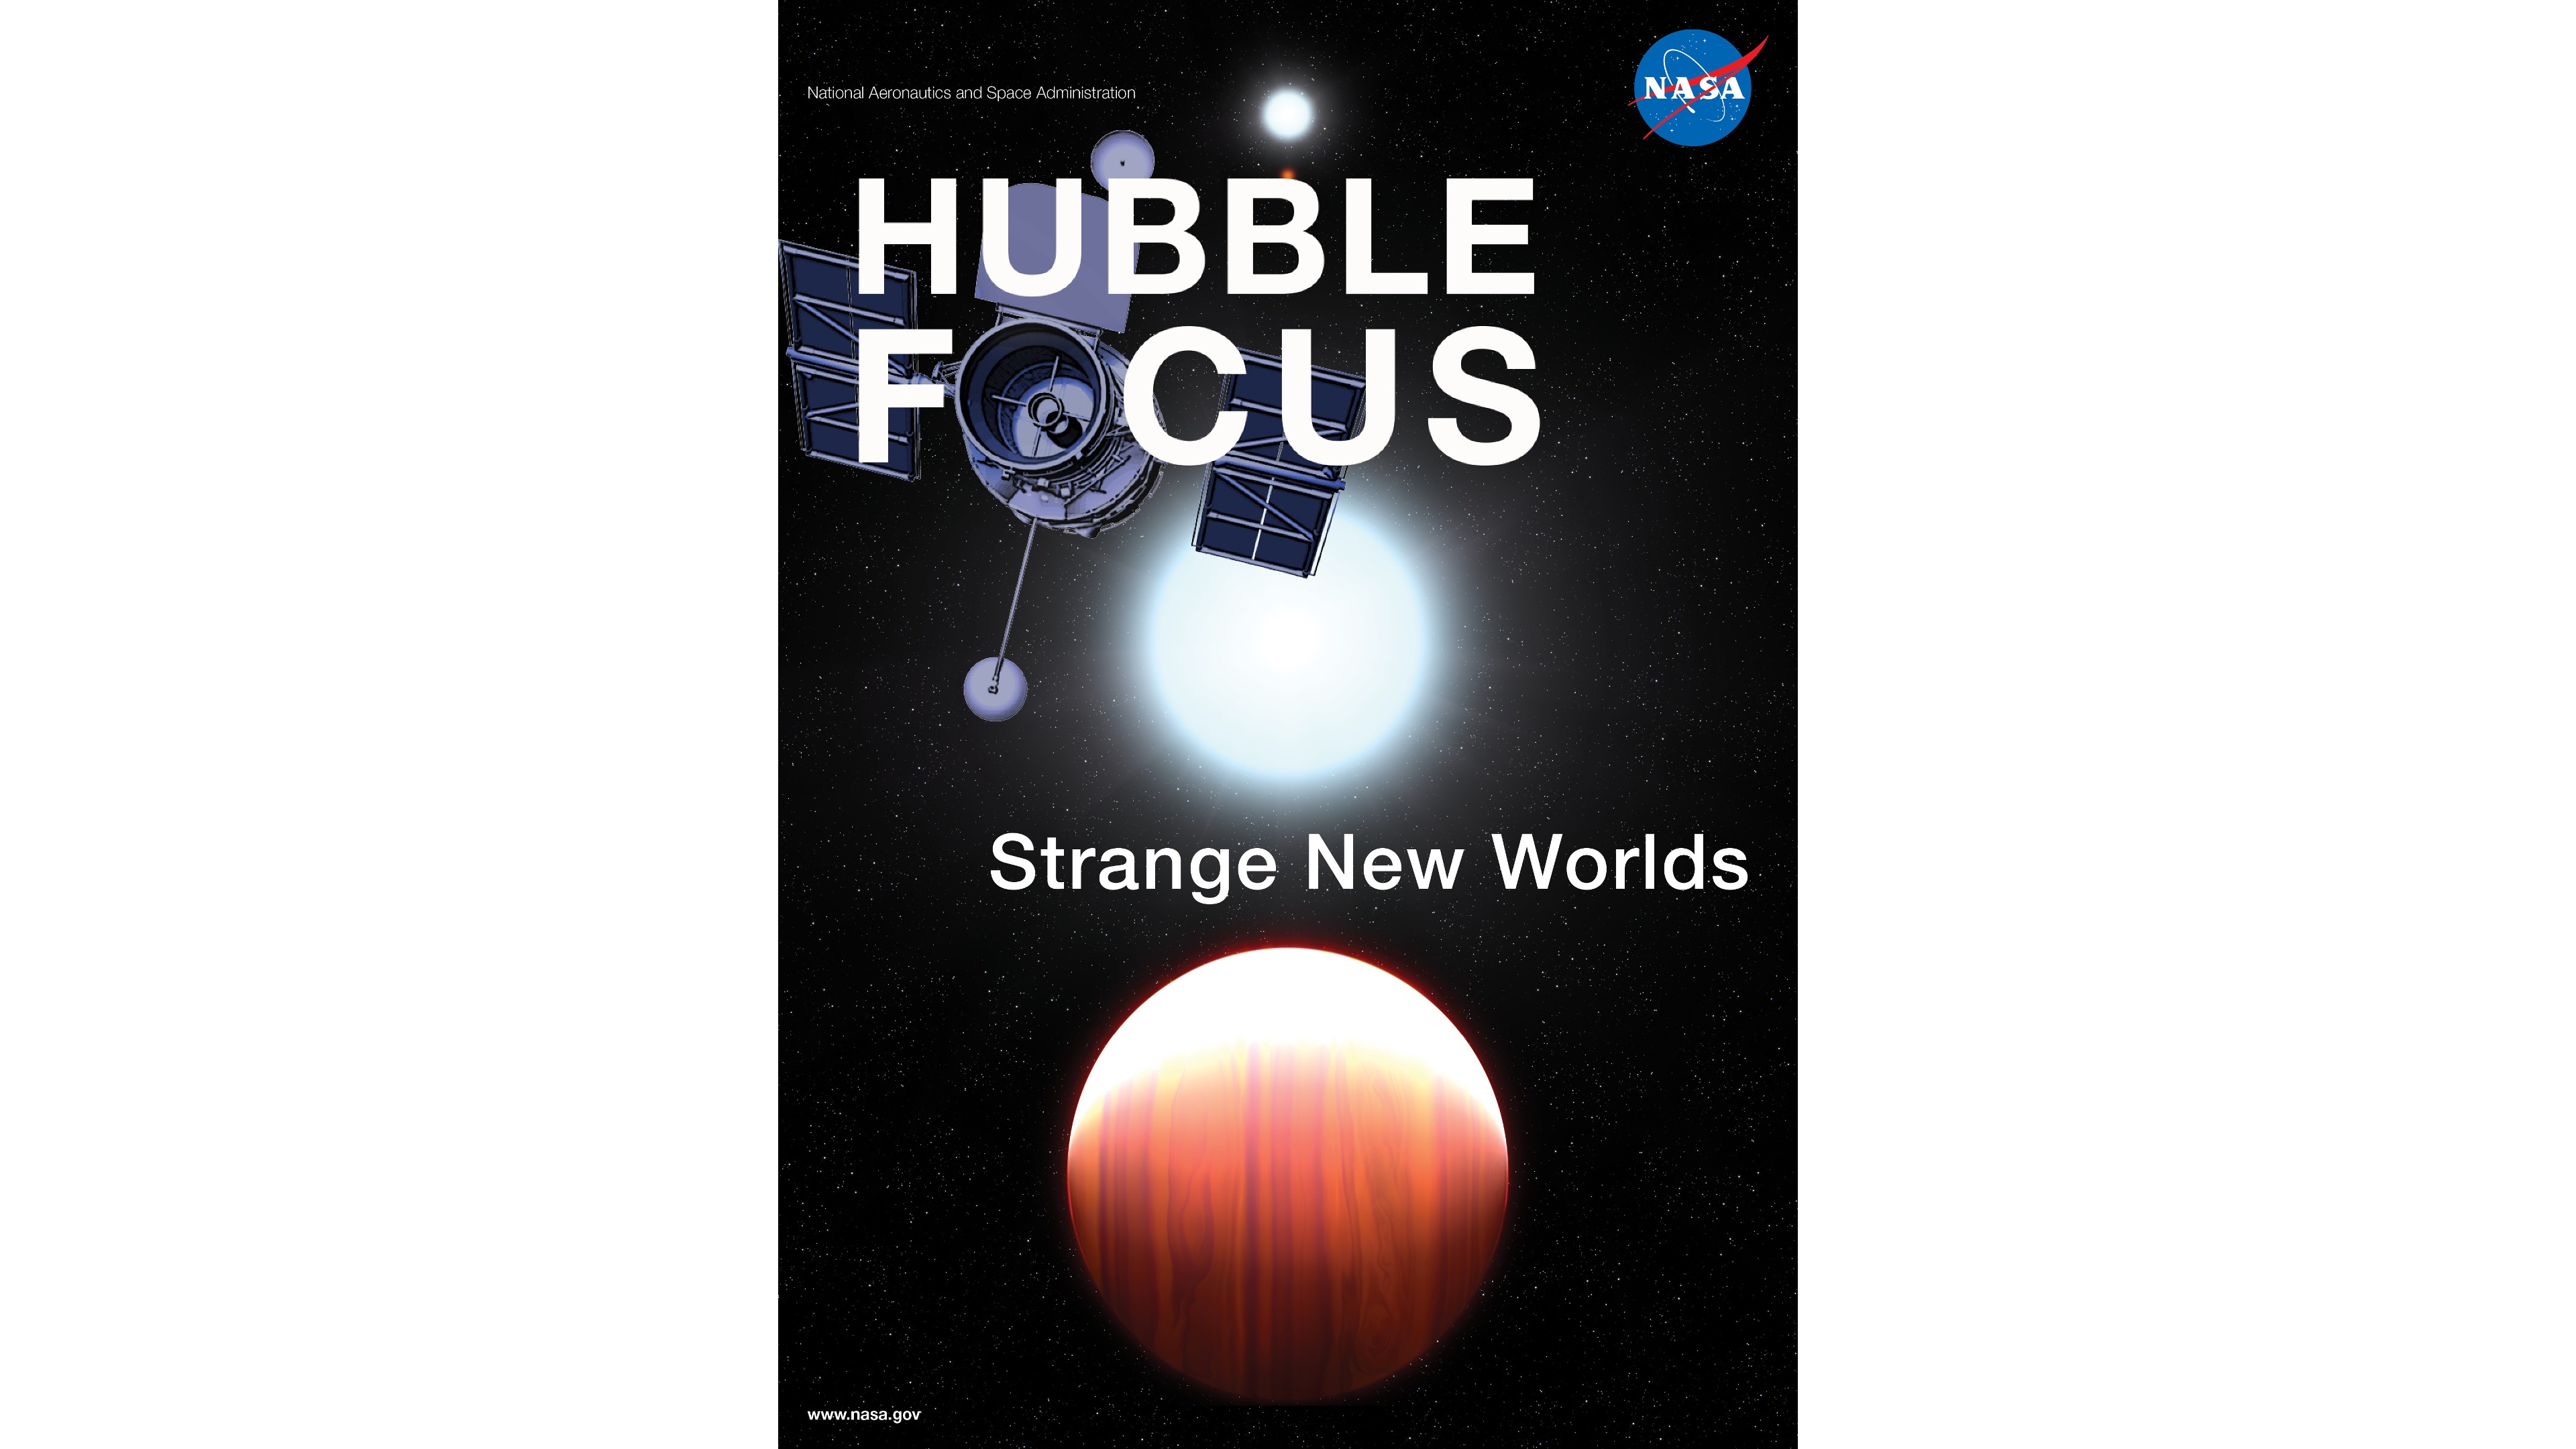 Hubble Focus - Strange New Worlds e-book cover